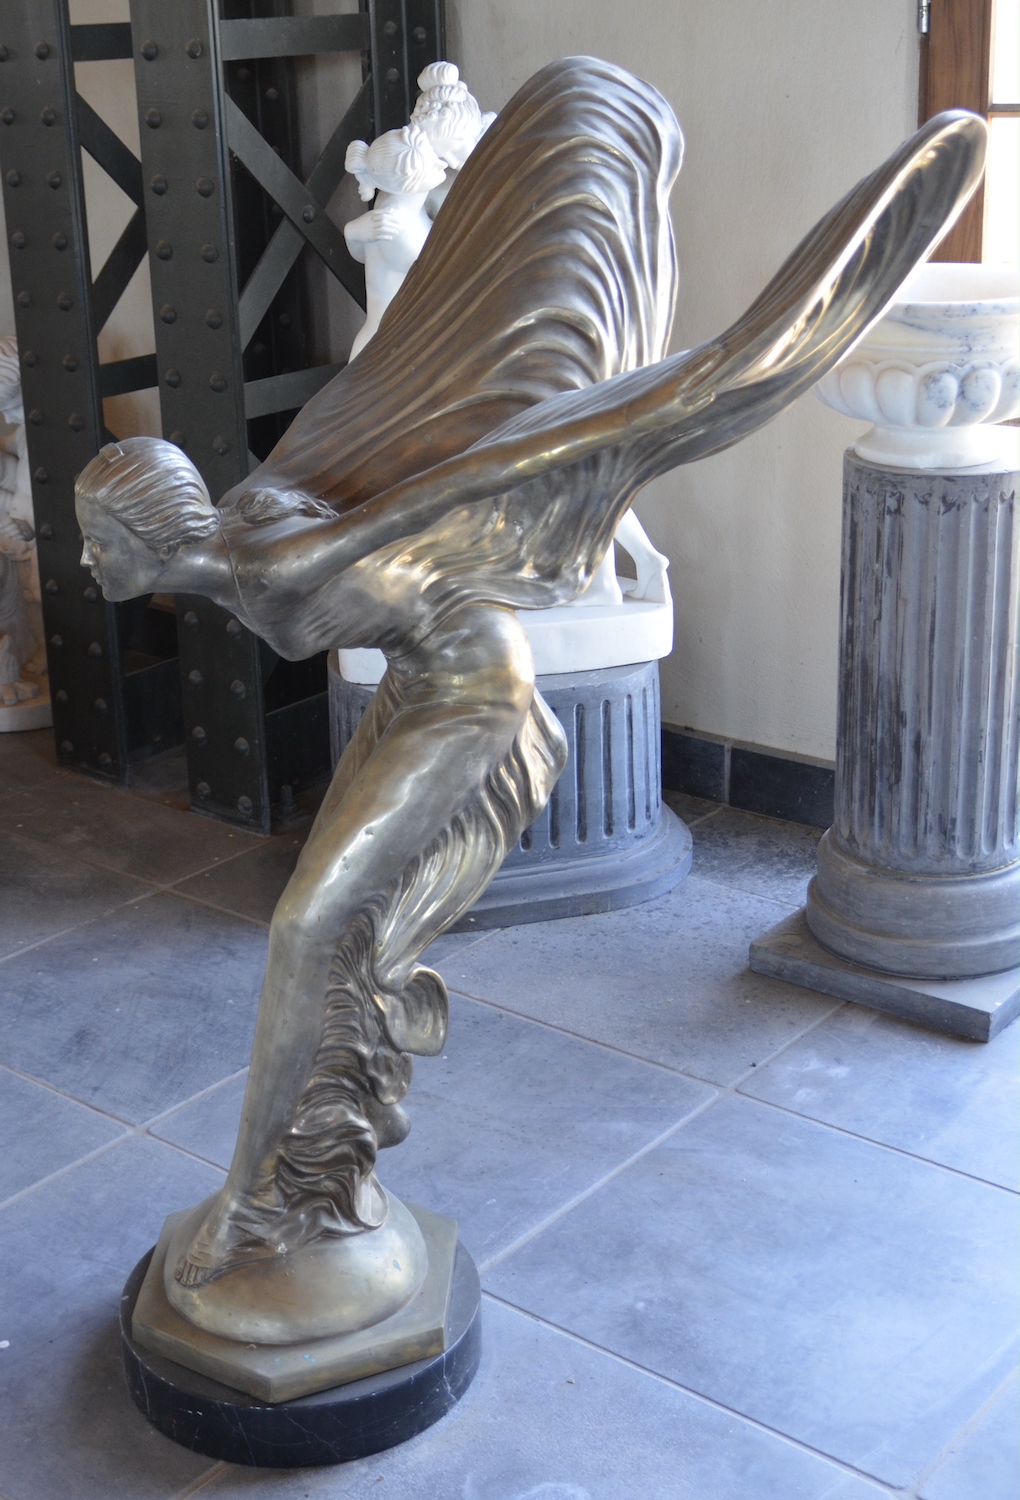 Bronzefigur SPIRIT OF ECSTASY 150 cm (EMILY)